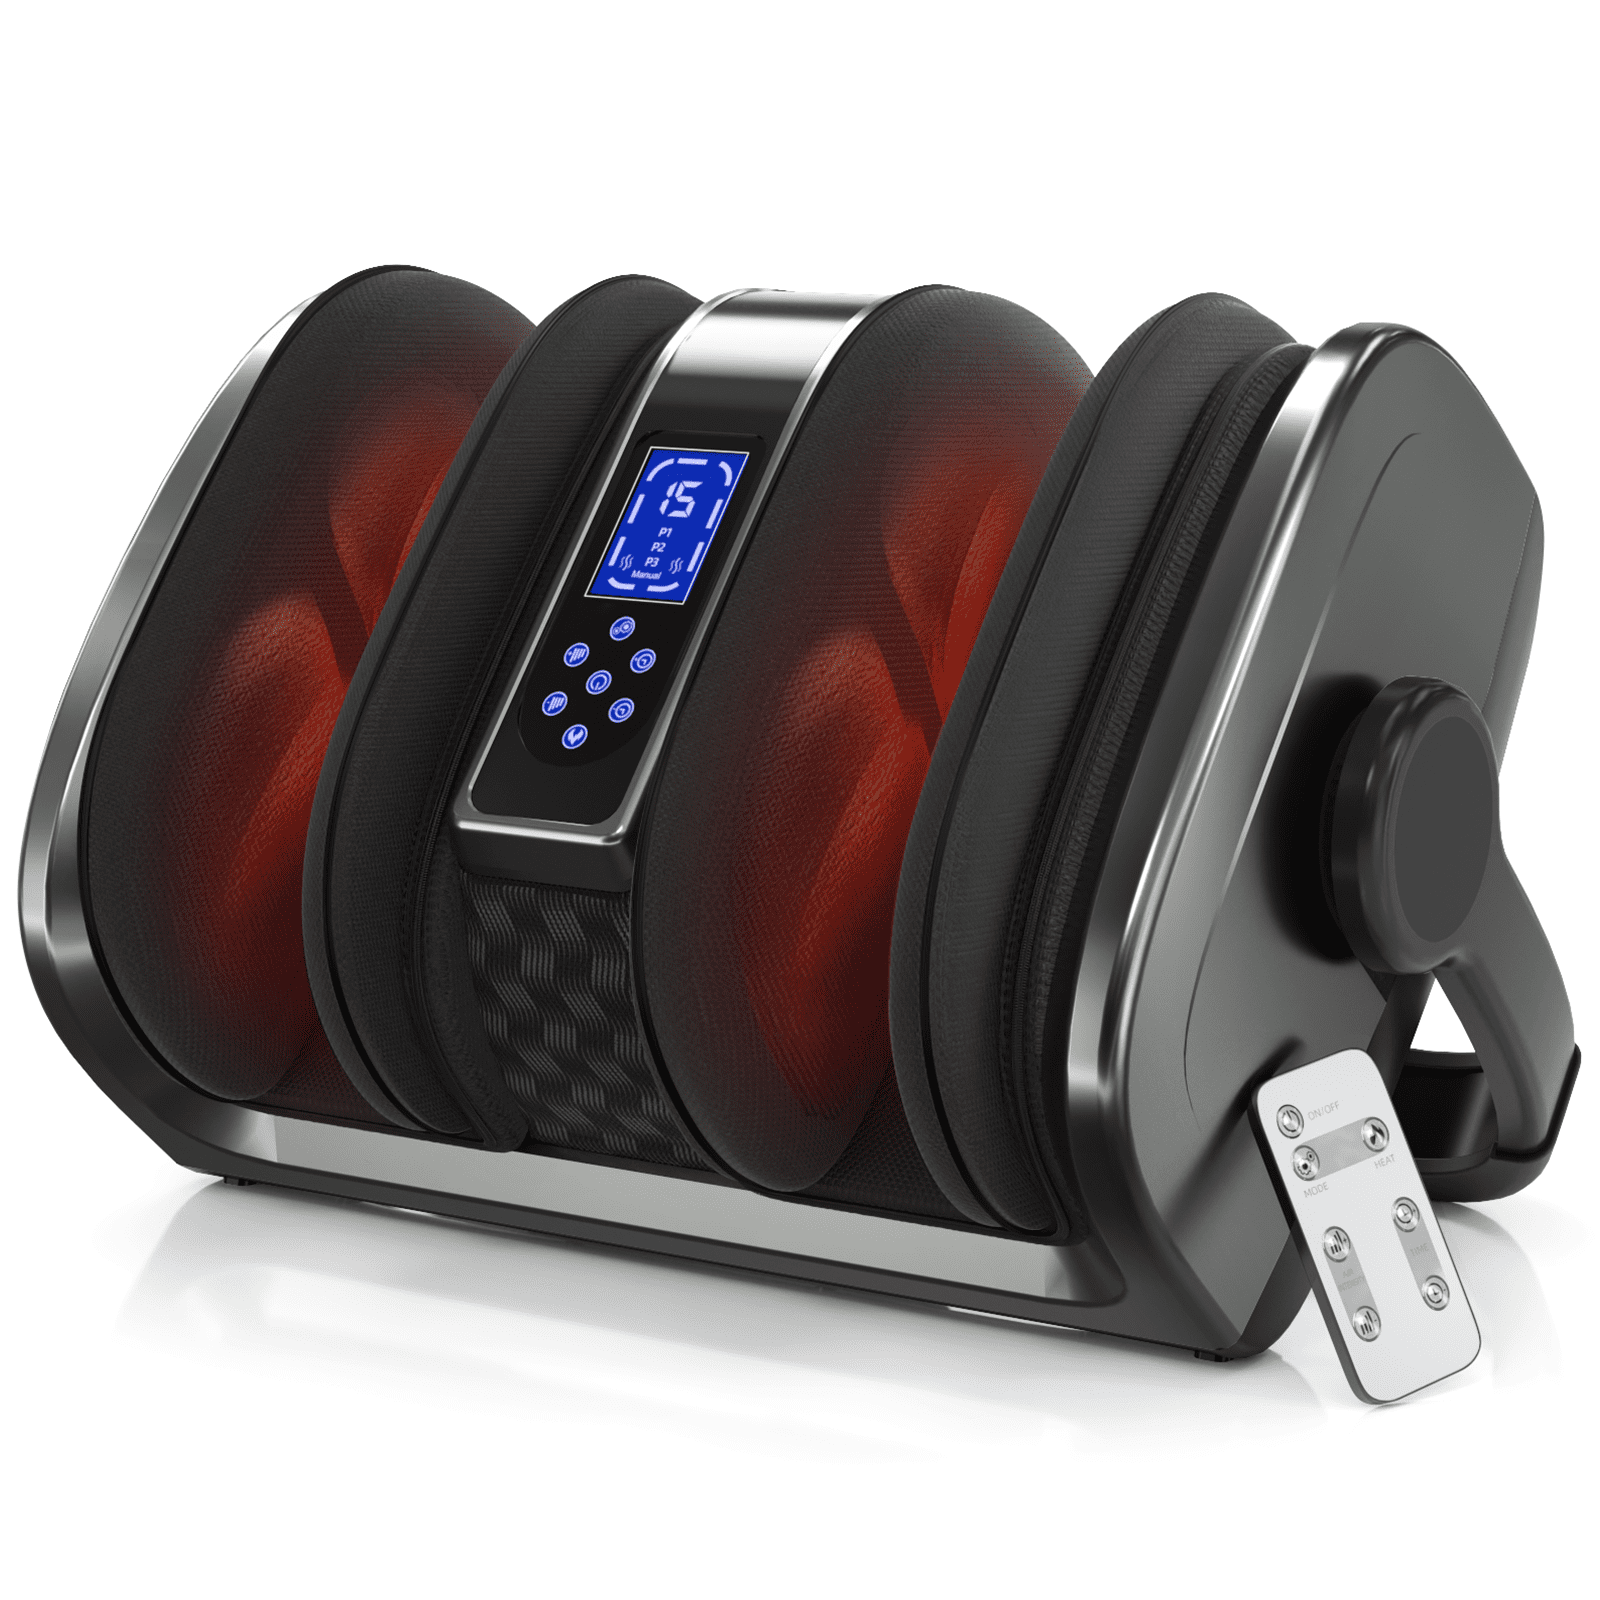  Nekteck Neck Massager and FM01 Foot Massager Machine with Heat  Bundle (Gray) : Health & Household